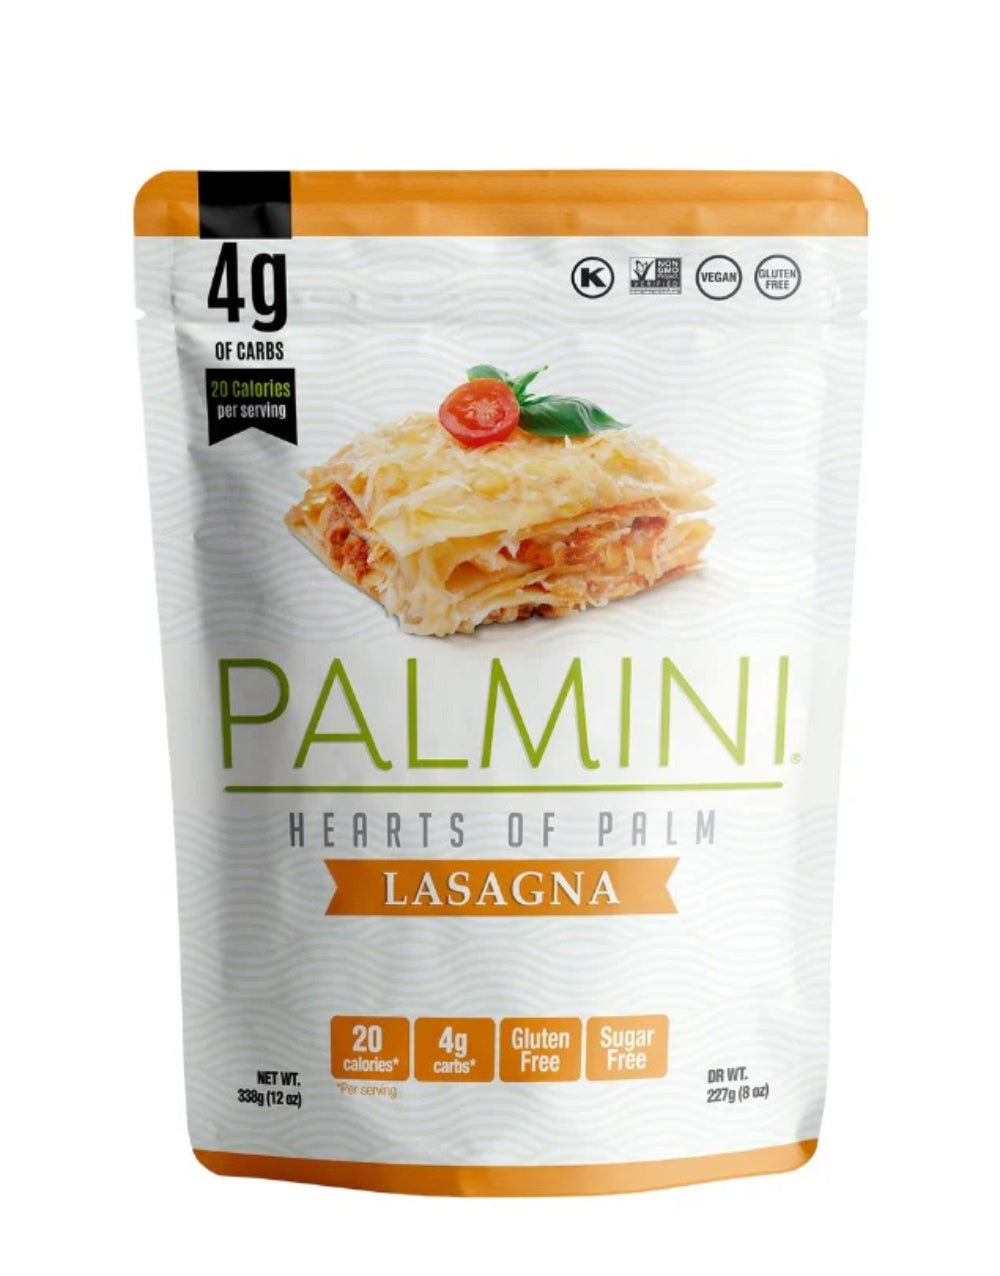 Lasagna de Palmito 227 gr Palmini